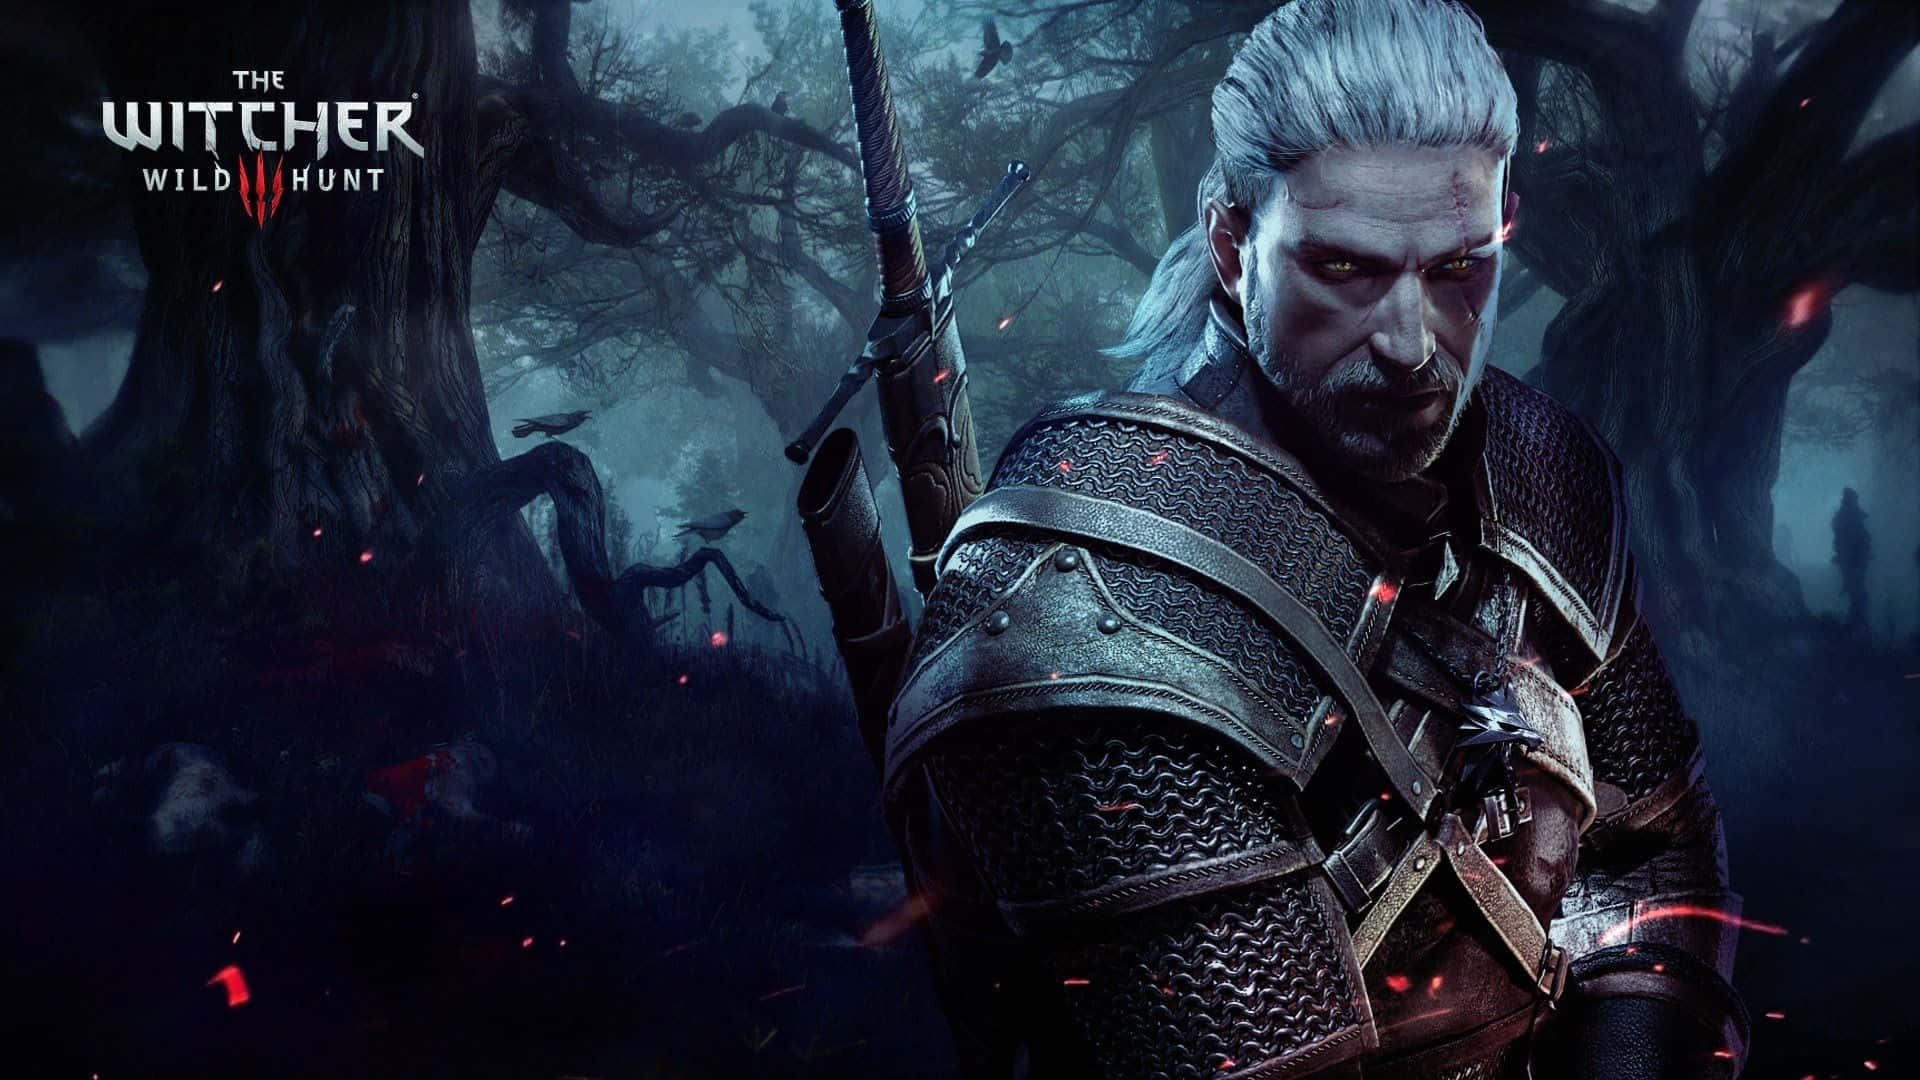 Witcher3 Skrivbordsbakgrund Geralt I Skogen. Wallpaper